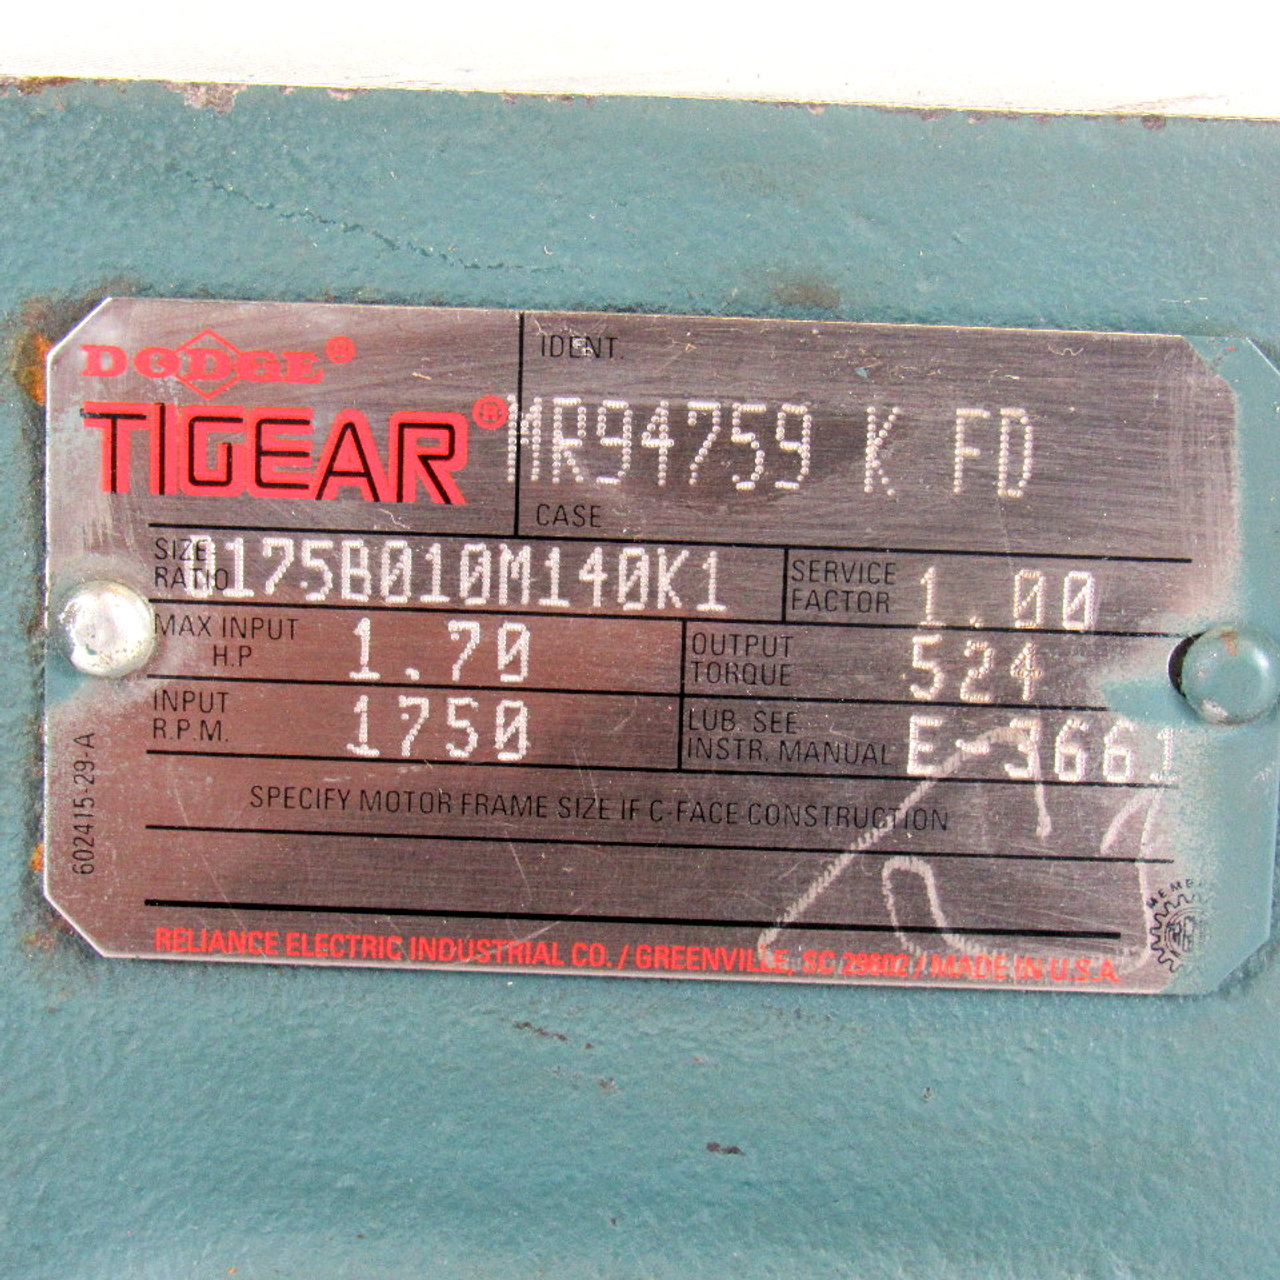 Dodge Tigear MR94759 K FD Gear Reducer, 140/175-10 Ratio, 1.70 HP, 524 Output Torque, 1750 RPM